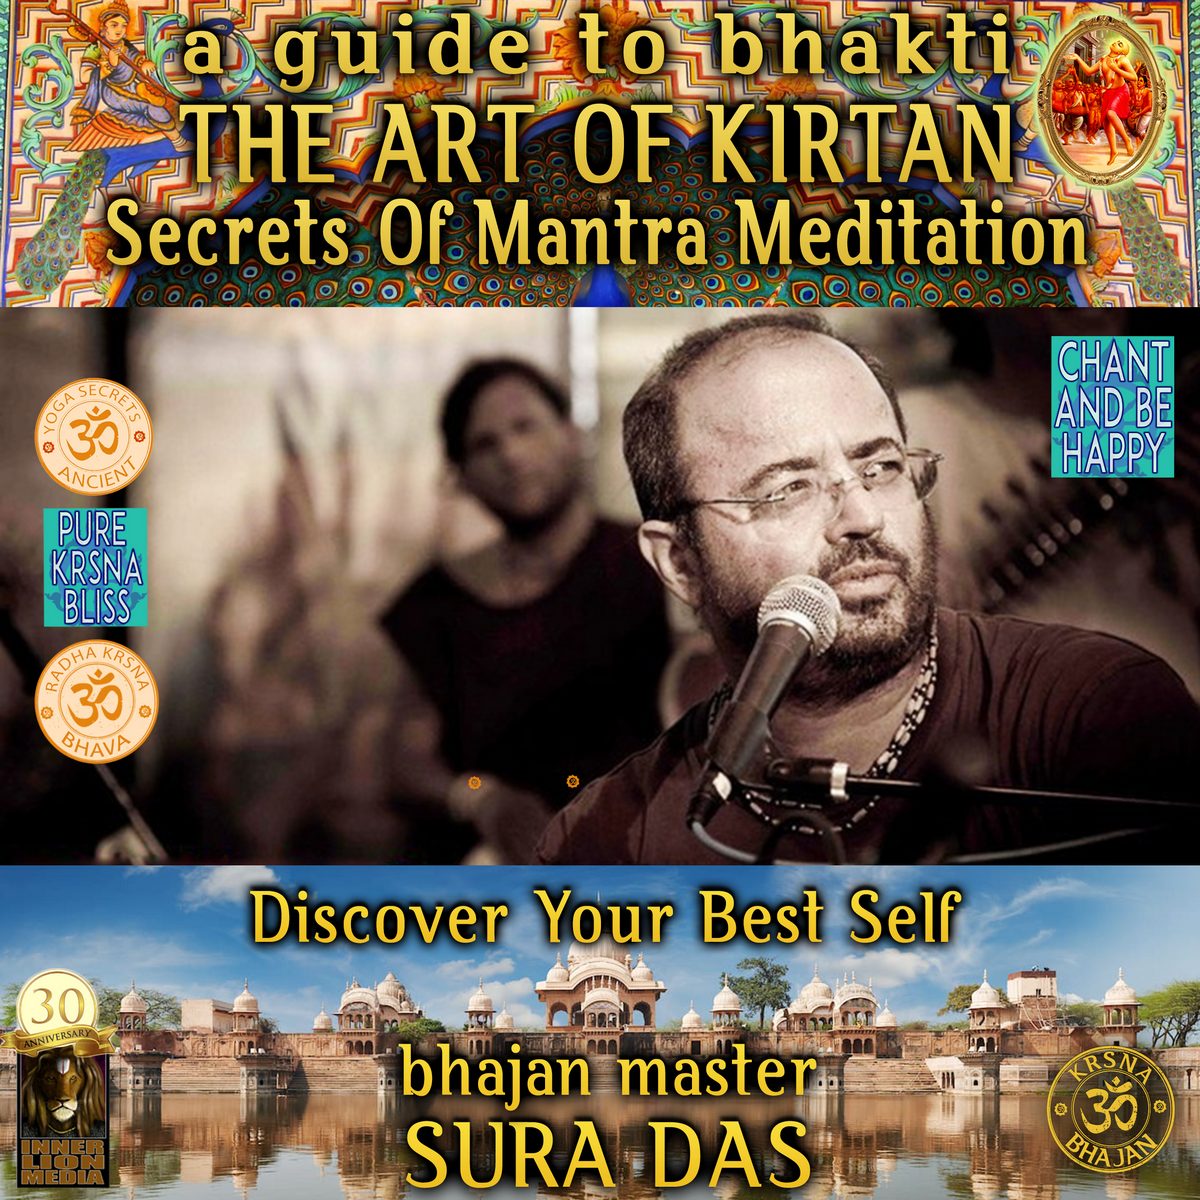 The Art Of Kirtan A Guide To Bhakti Secret Of Mantra Meditation